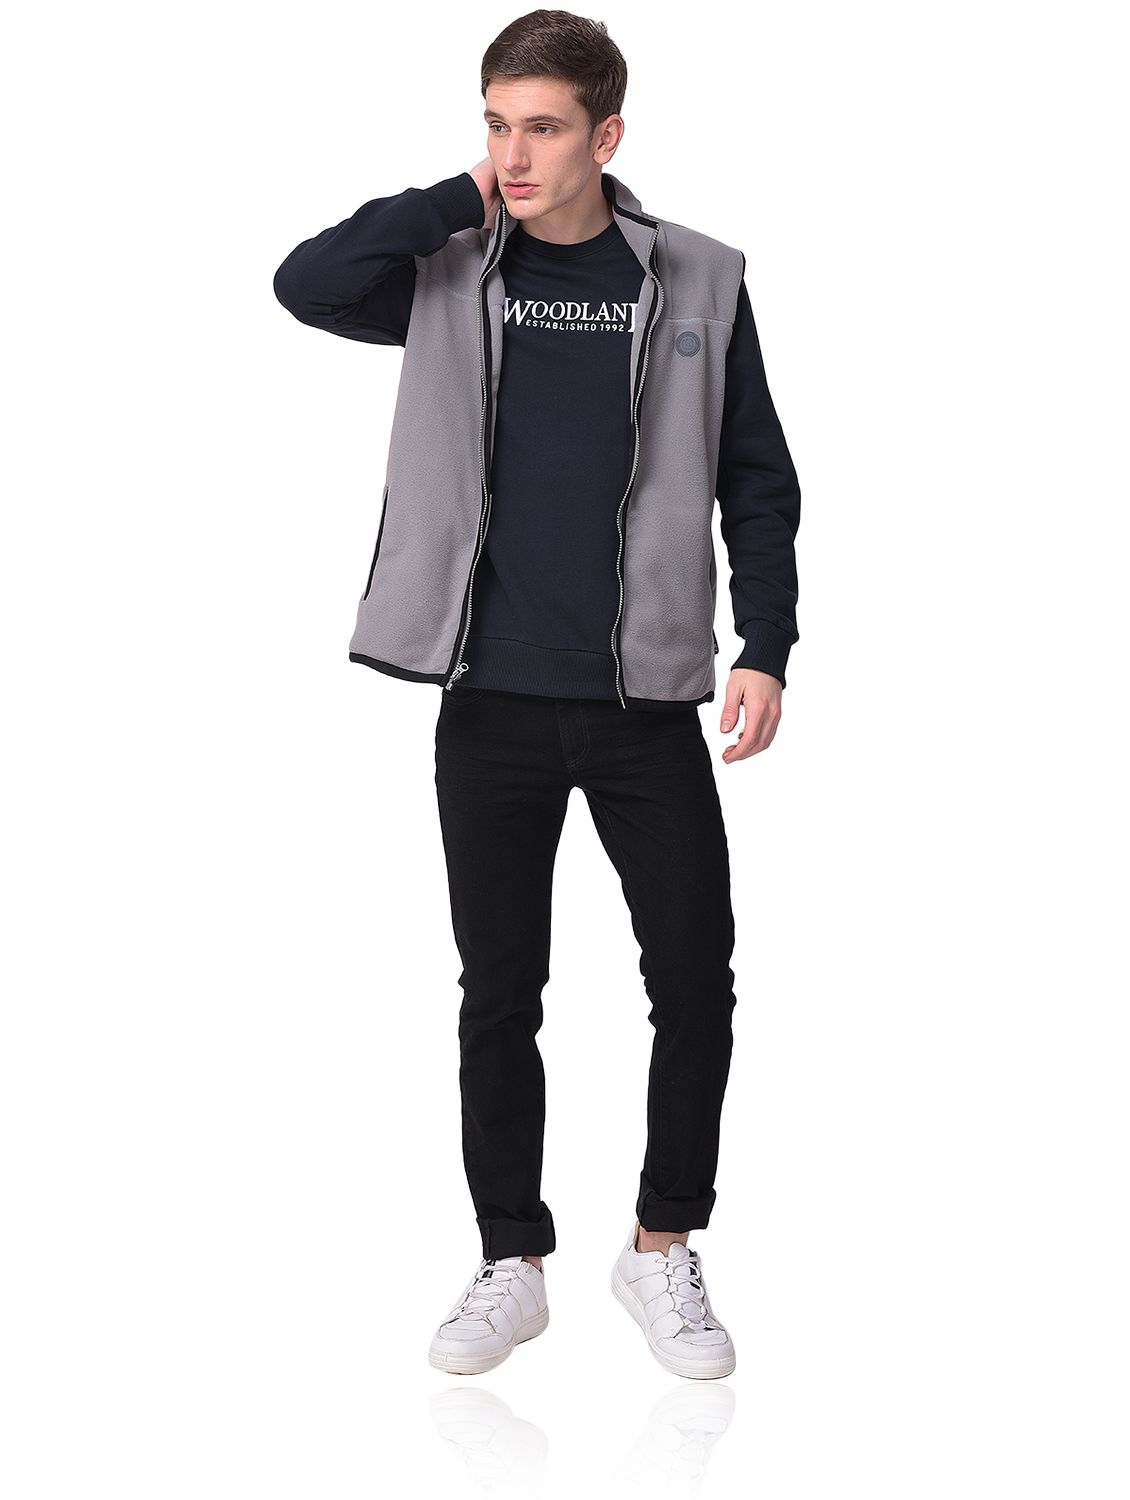 Shop for Customized Sleeveless Fleece Jacket Online